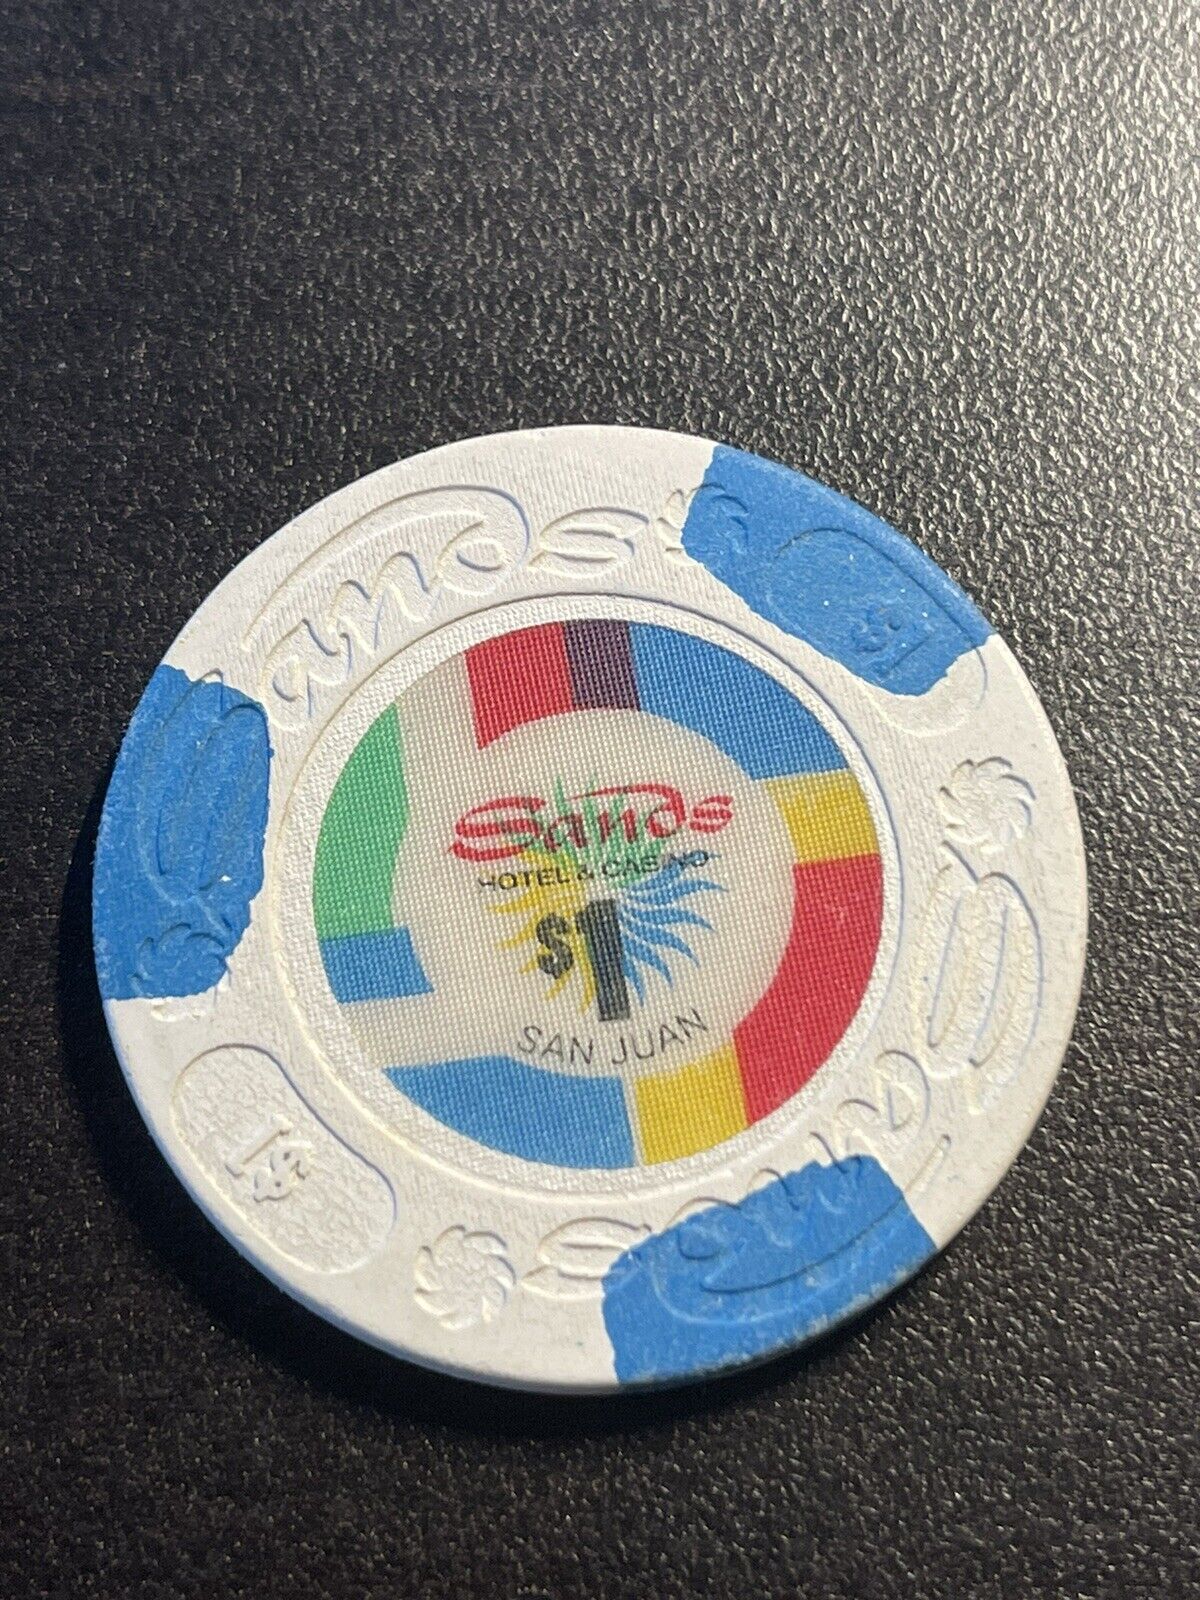 $1 Sands San Juan Puerto Rico Casino Chip